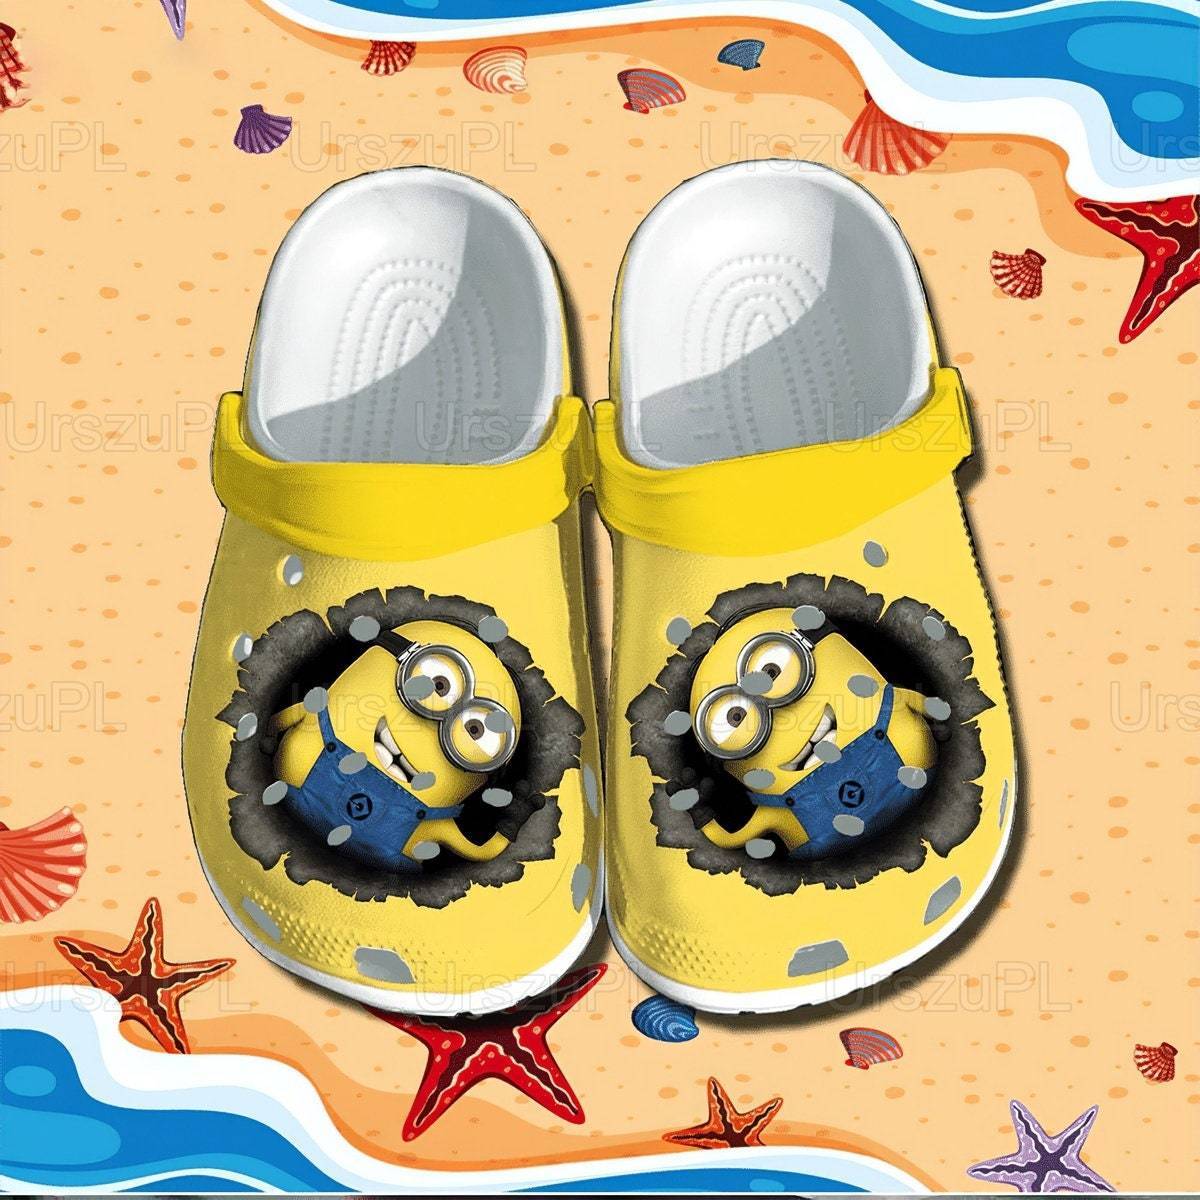 Minions Design Cute Unisex Clogs Ultimate Disney Inspired Sandal Gift